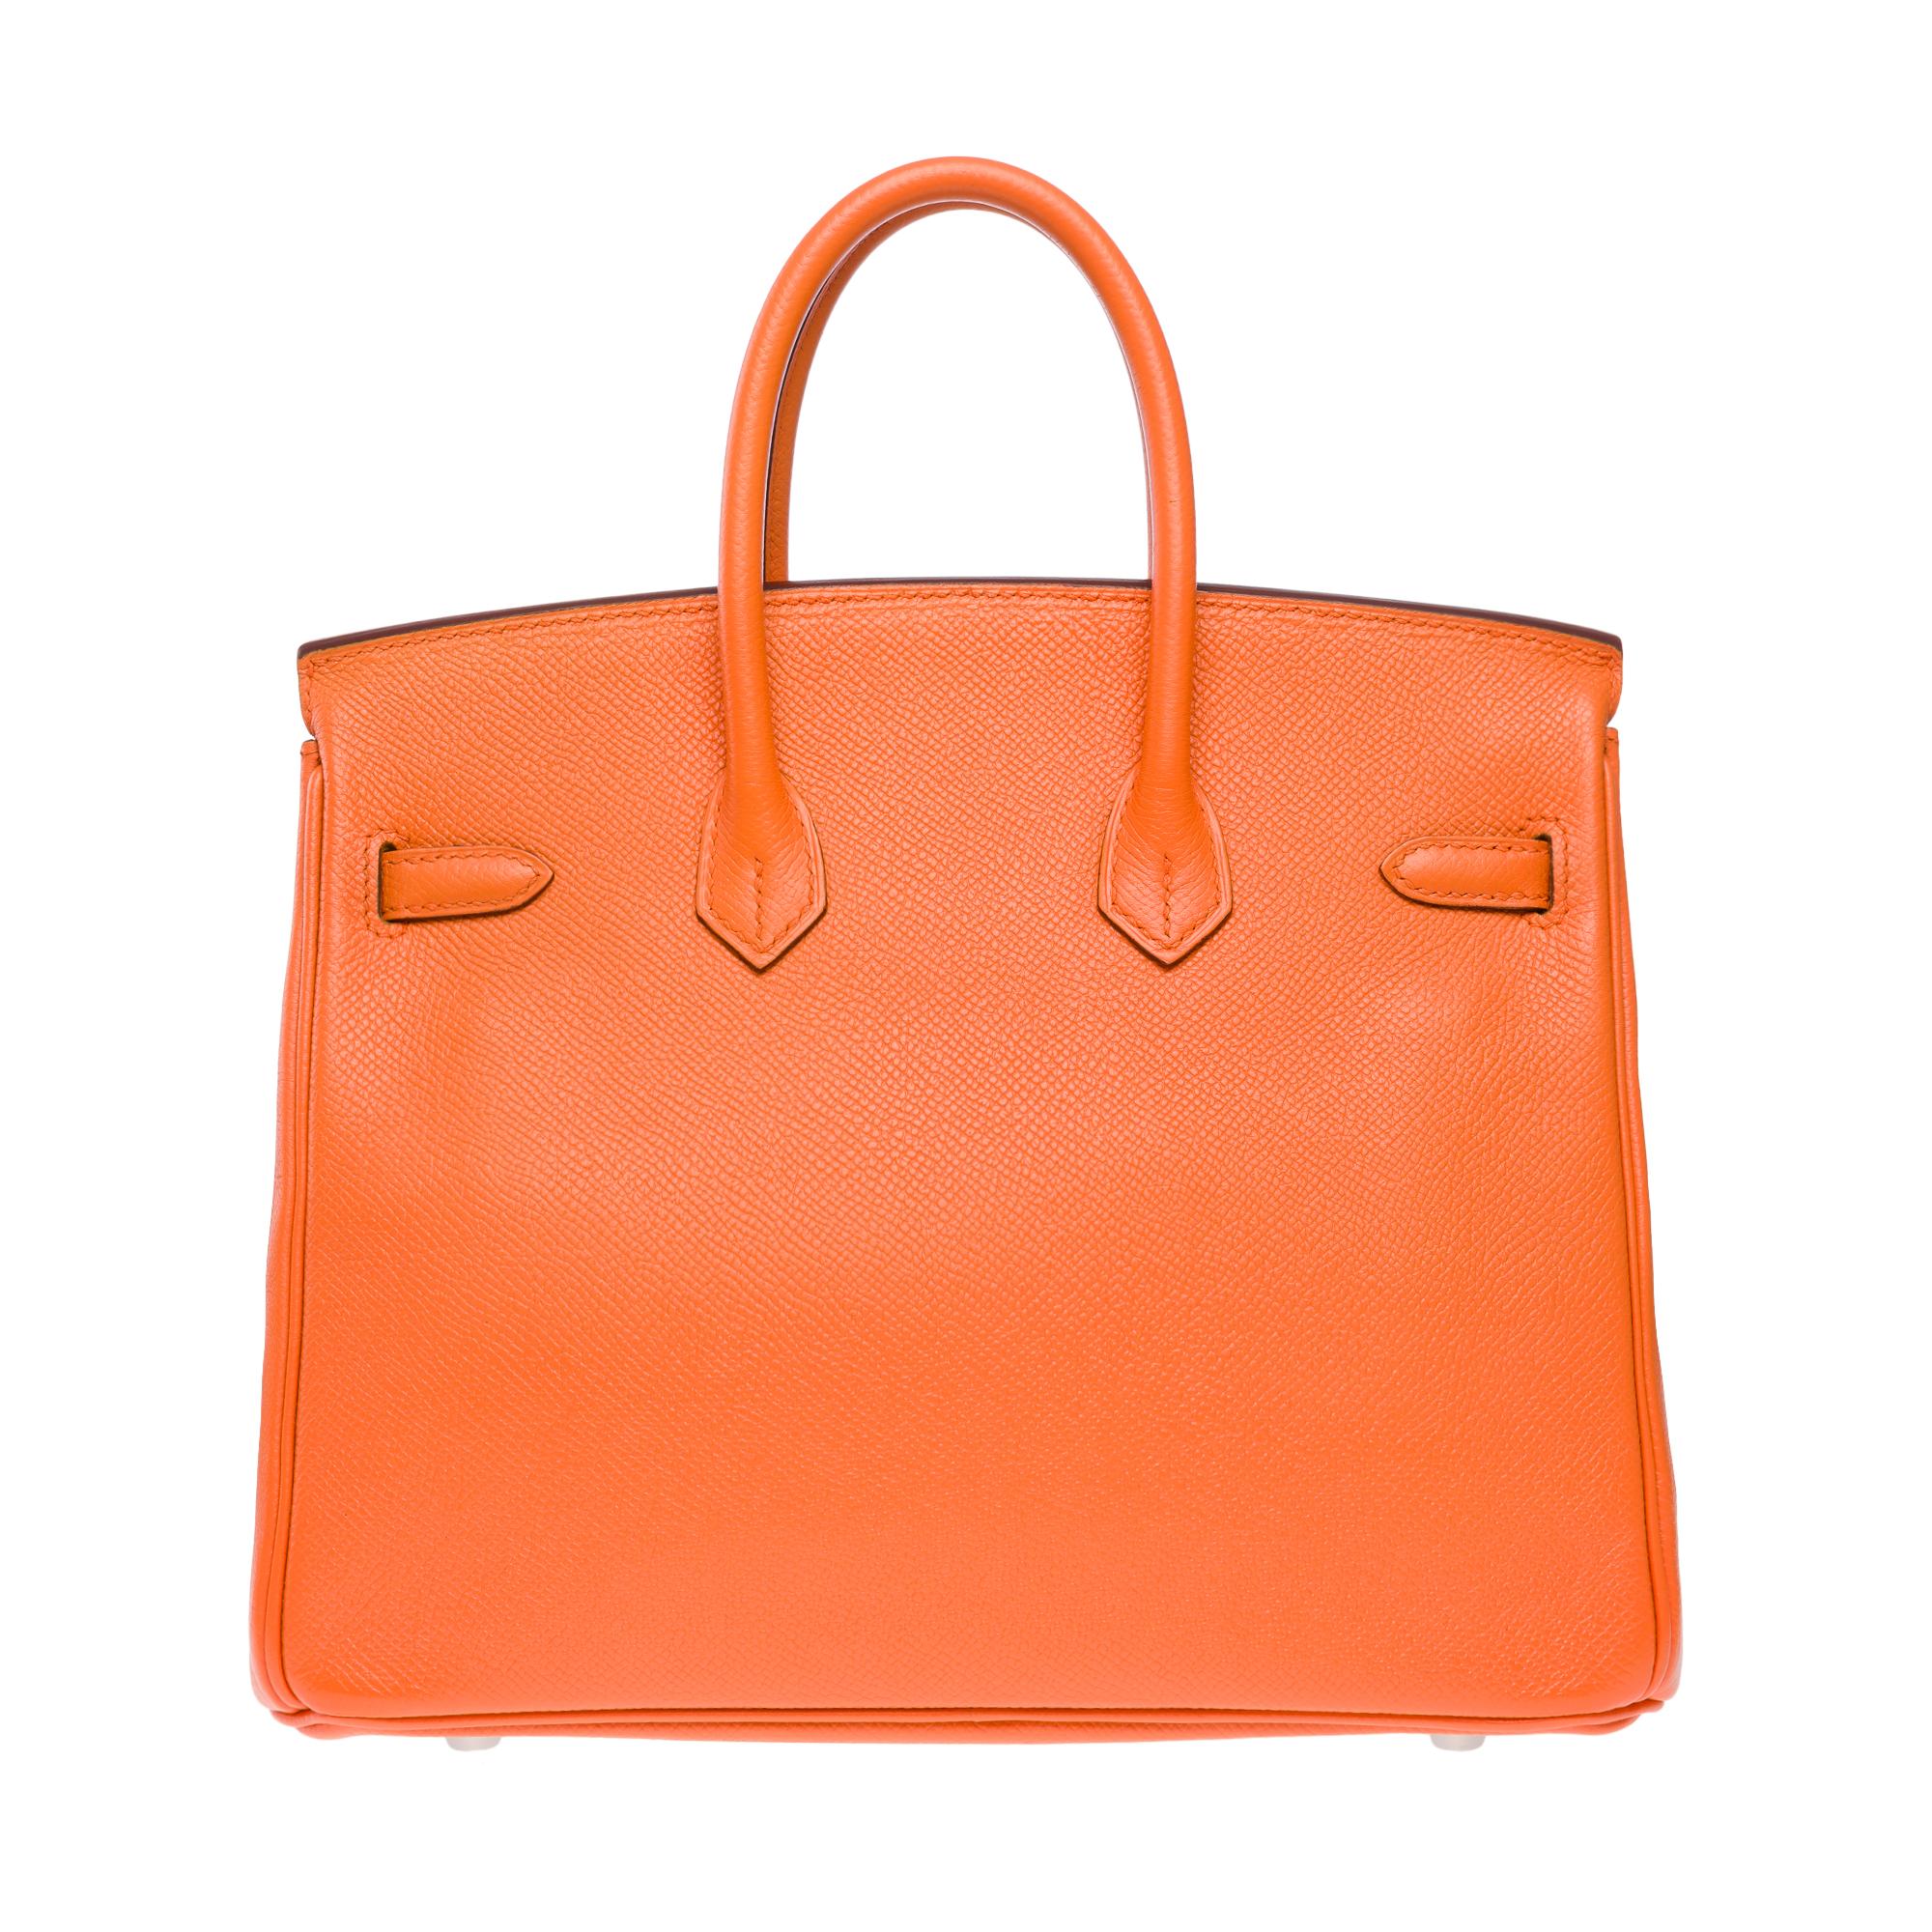 Bright Hermes Birkin 25cm handbag in Orange Epsom calf leather, SHW For Sale 1